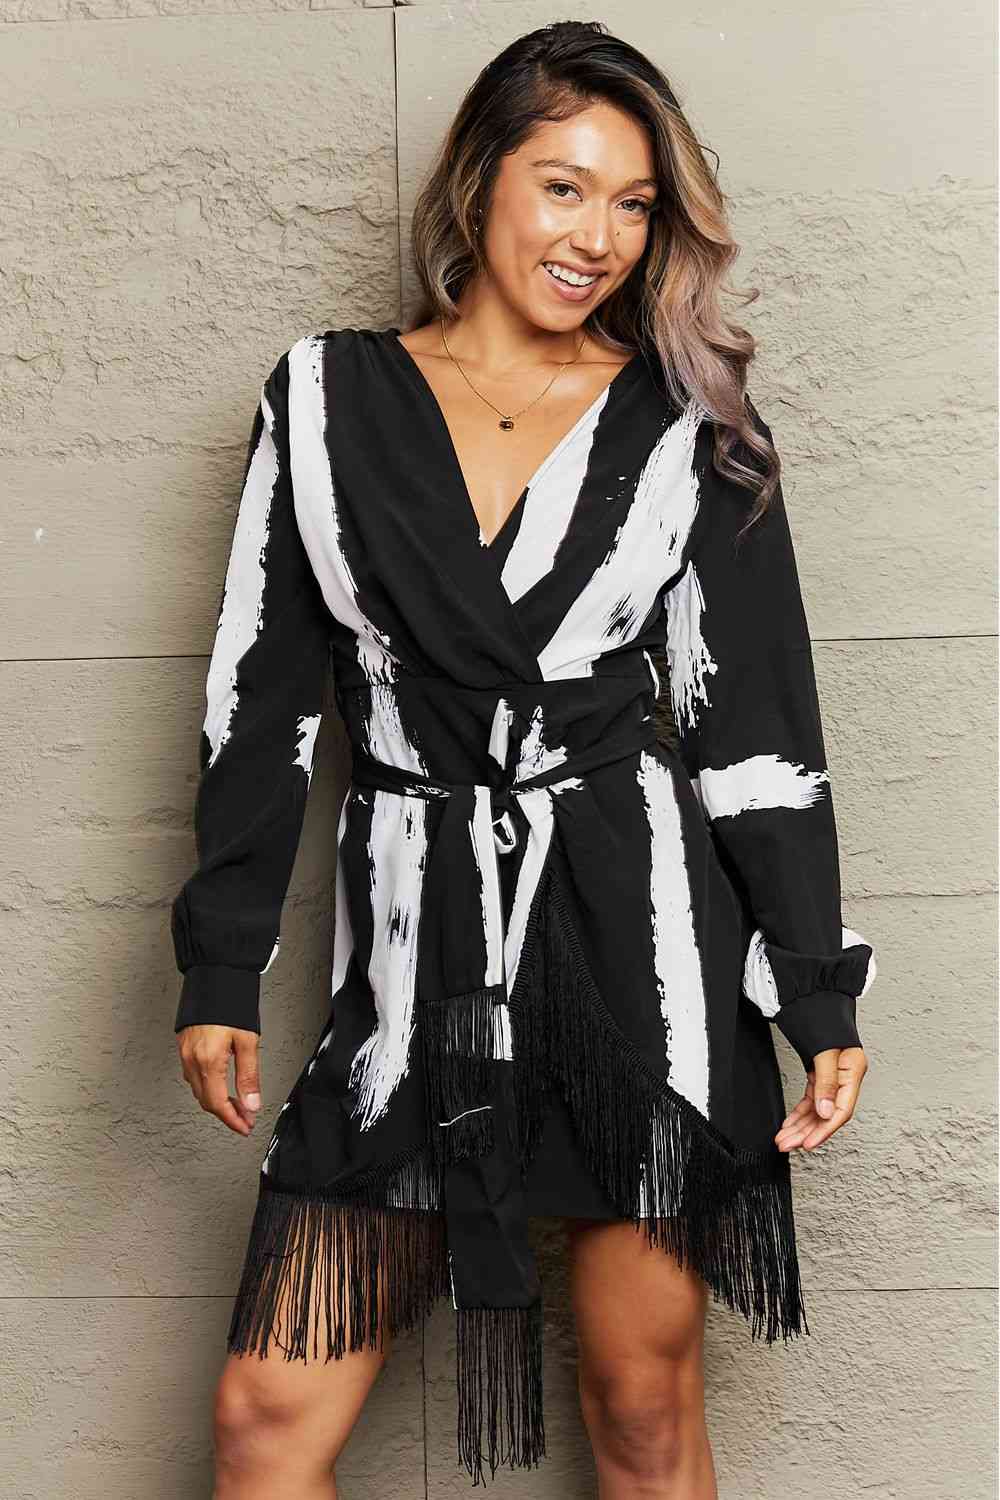 TEEK - Black and White Fringe Detail Dress DRESS TEEK Trend   